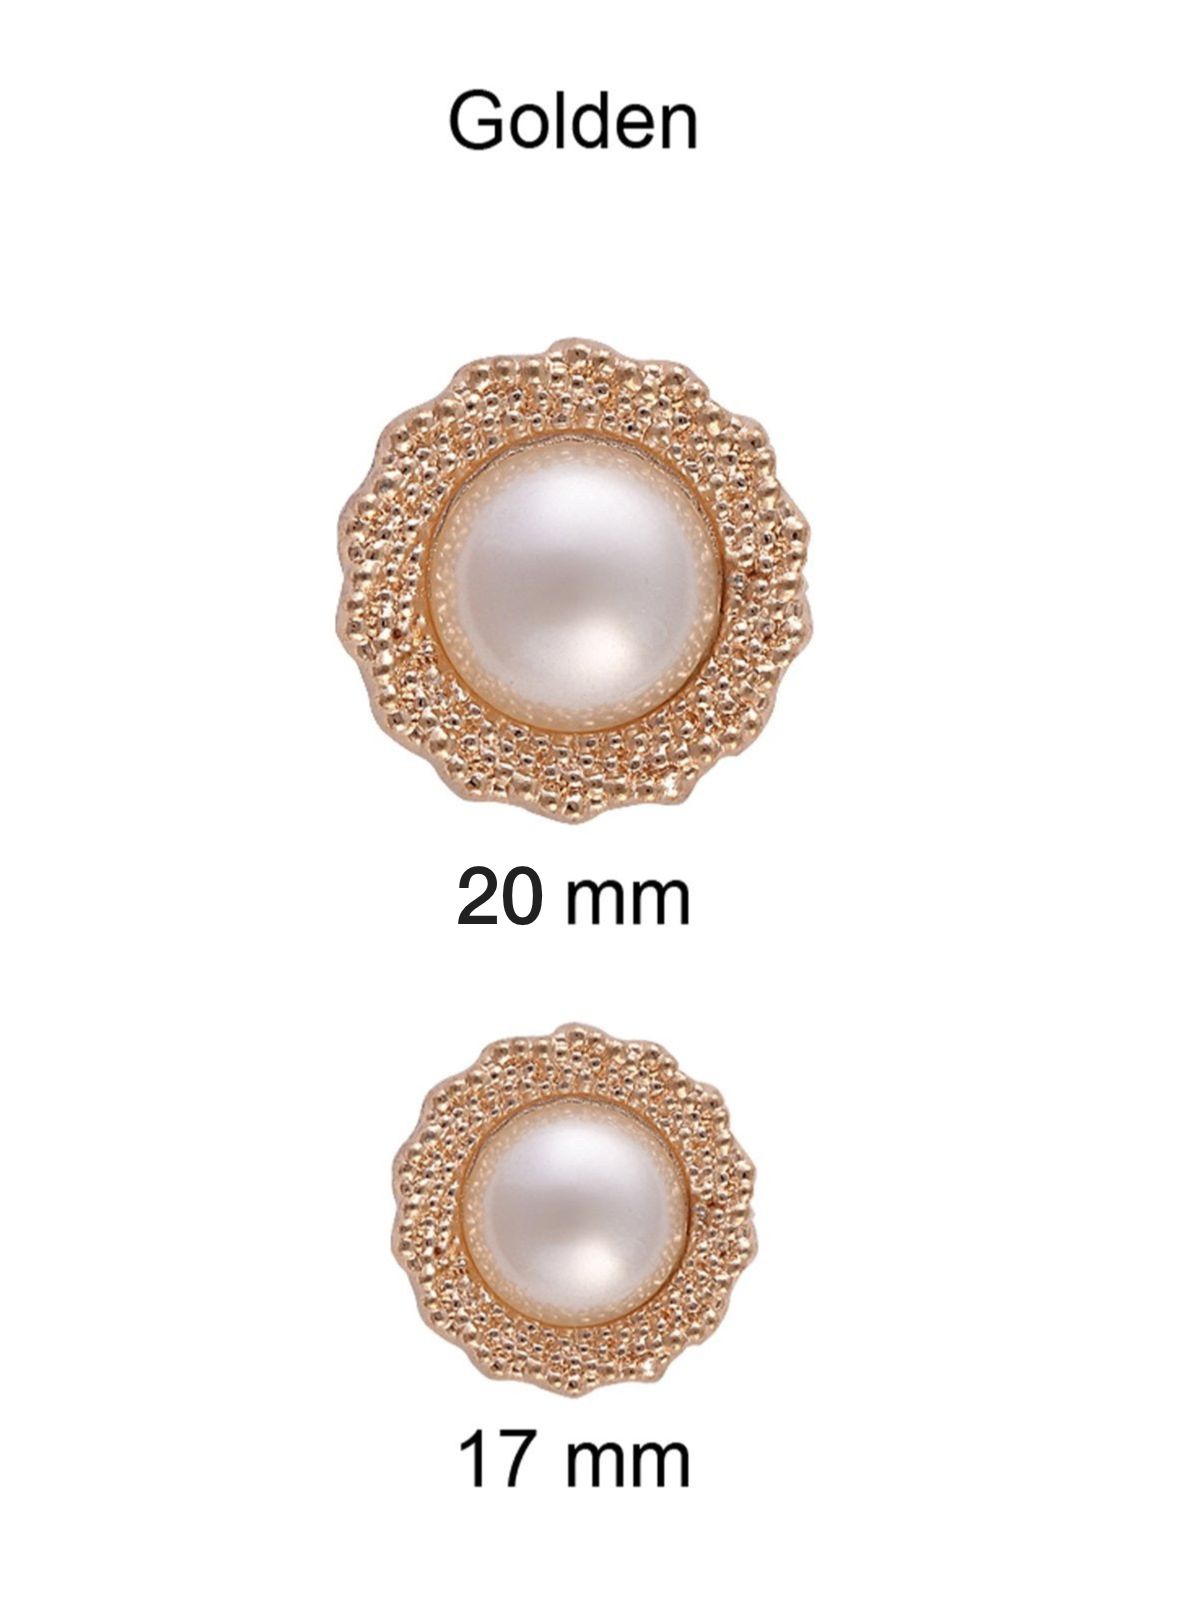 Decorative Golden Tone Round Shape Pearl Metal Button